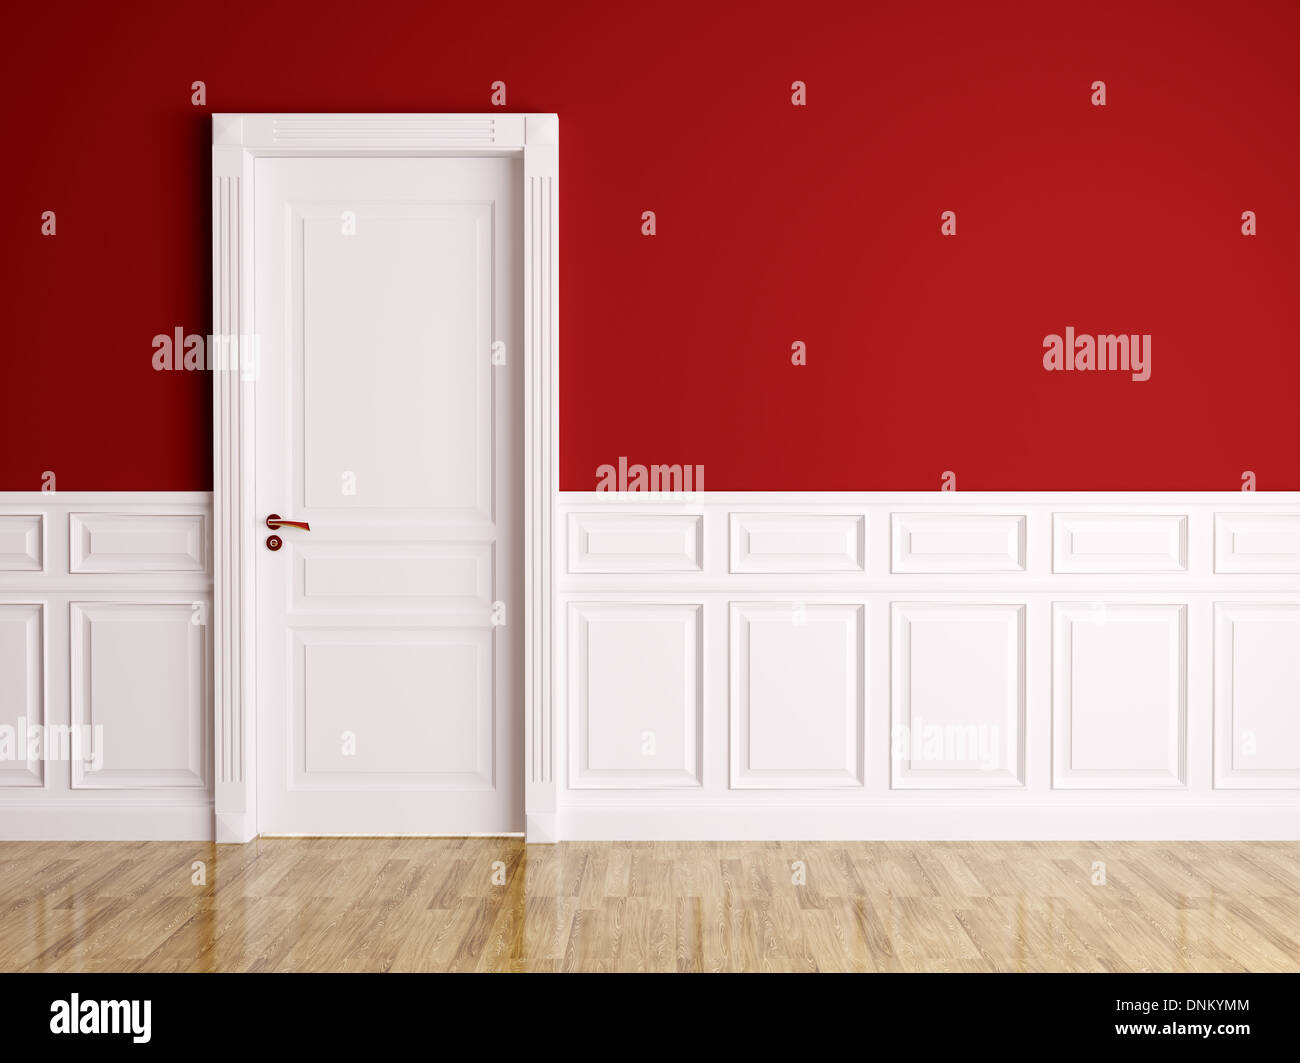 Red white interior with white classic door Stock Photo